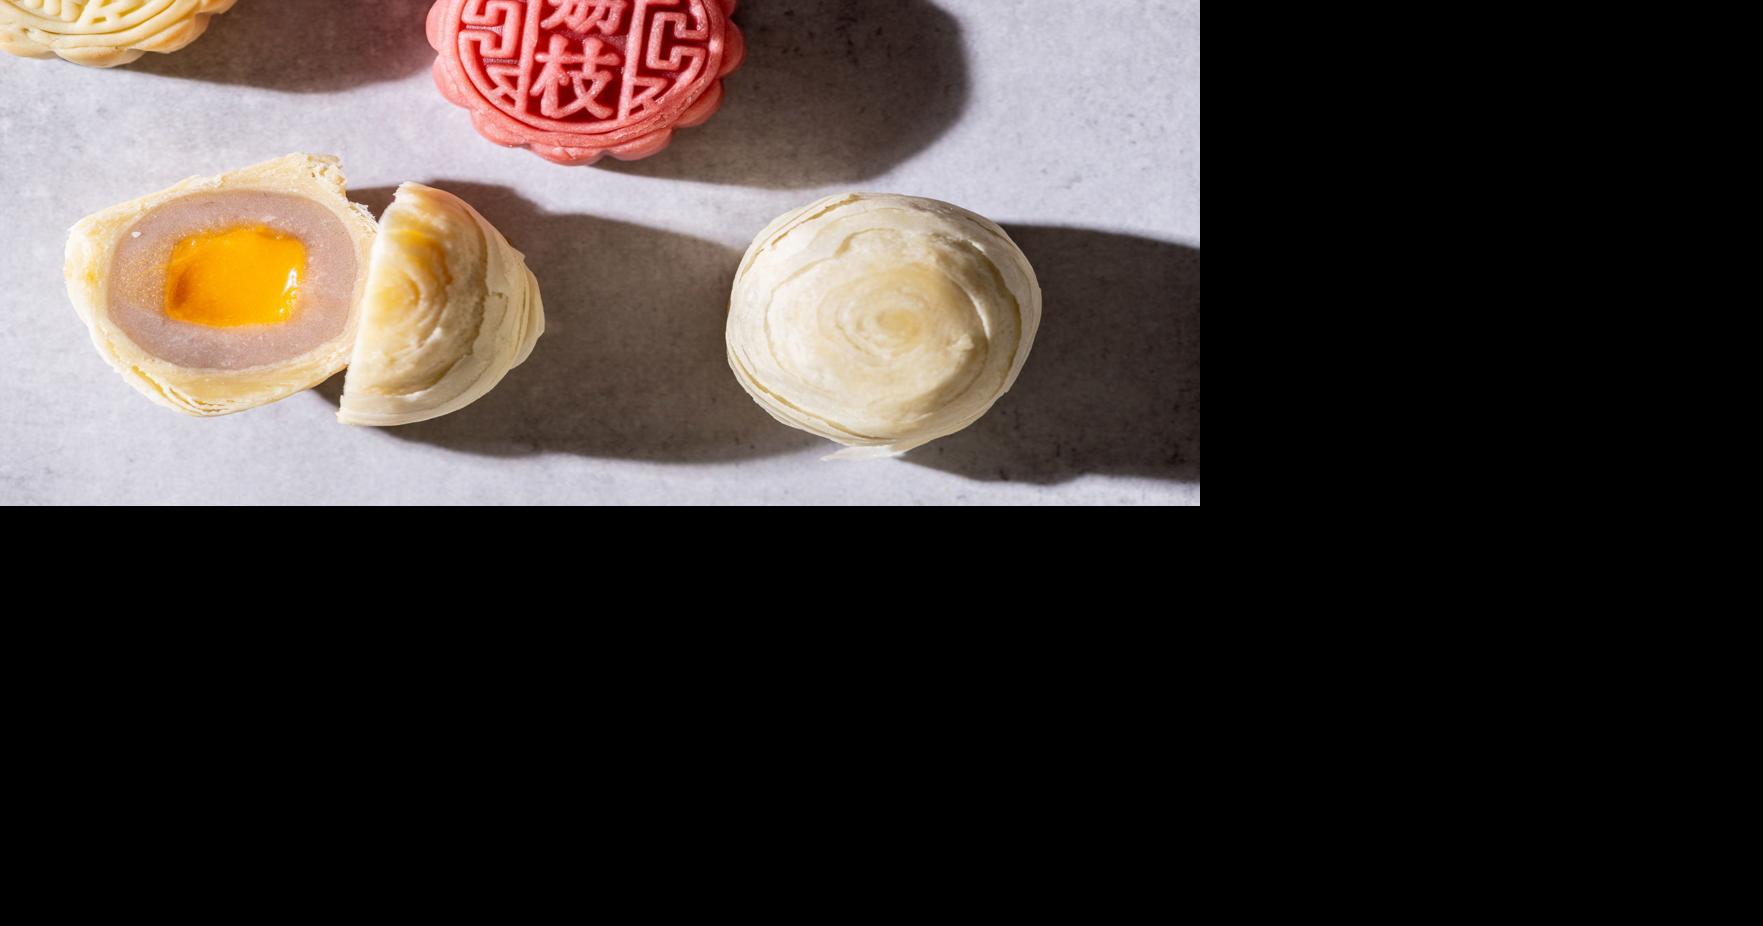 8 deliverable mooncake gift sets for Mid-Autumn Festival 2021